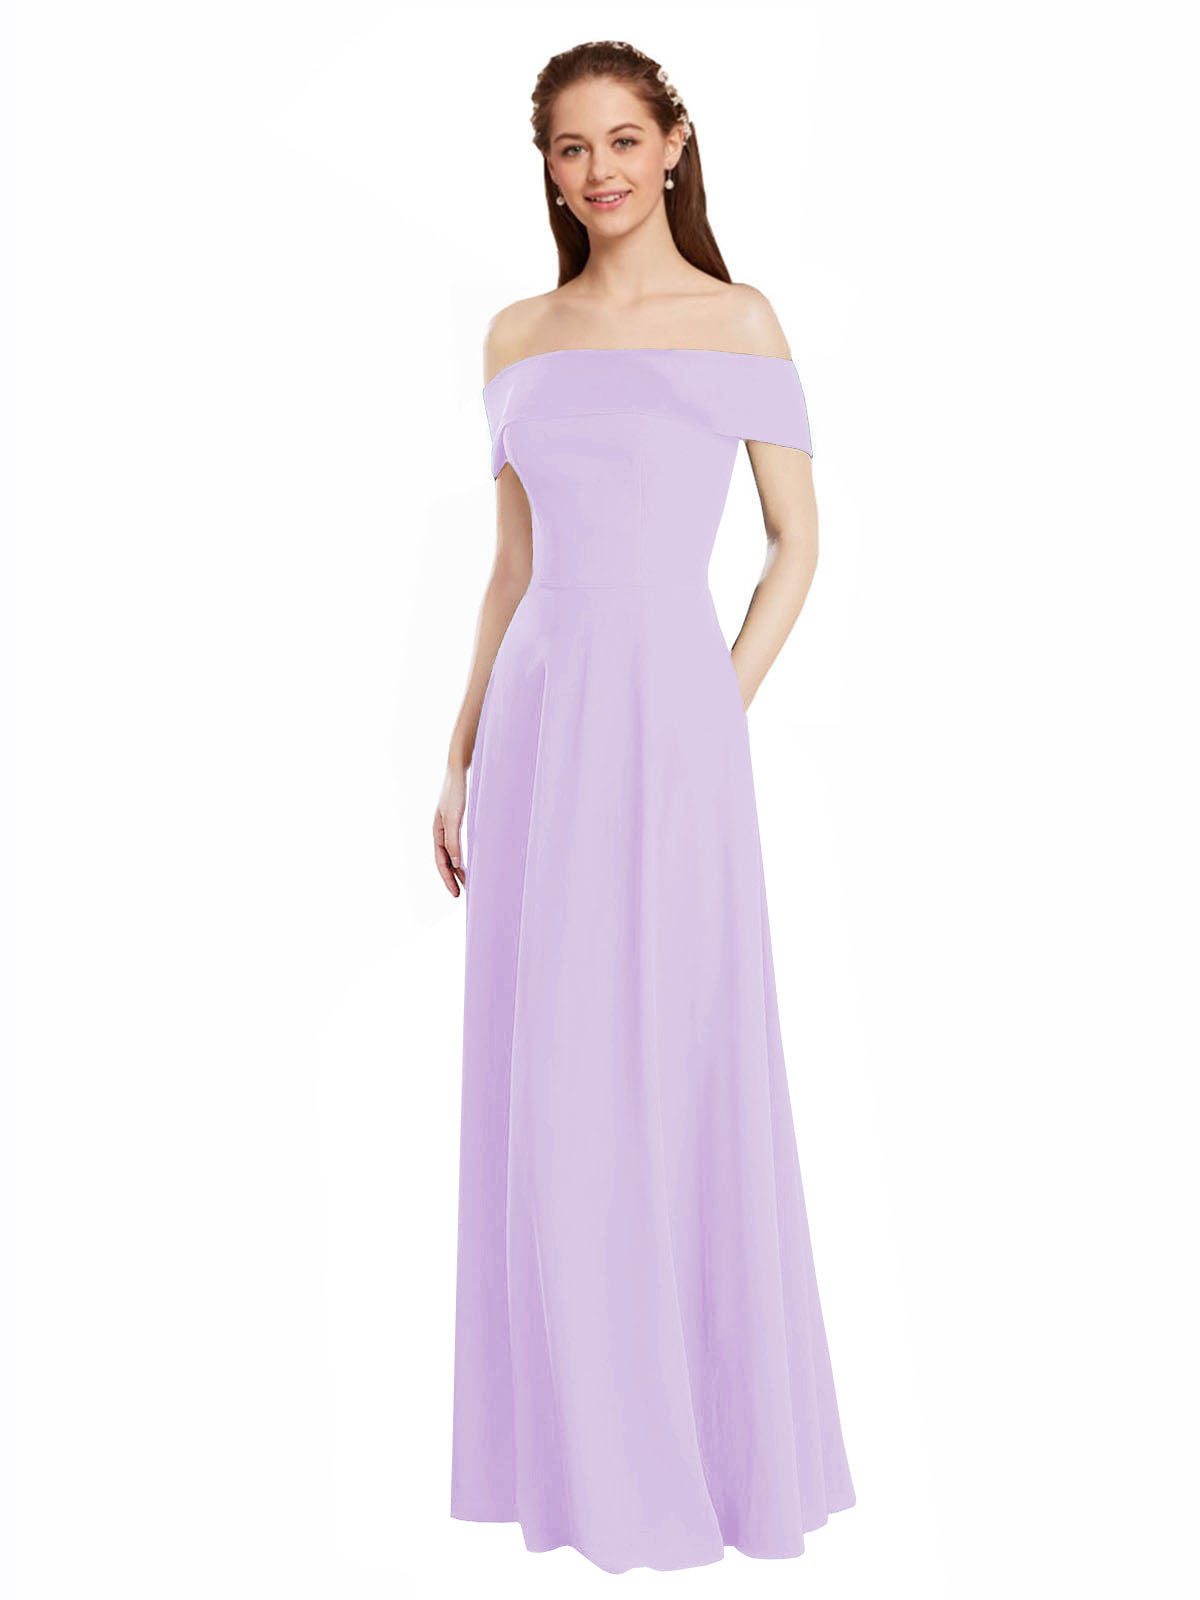 Lilac A-Line Off the Shoulder Cap Sleeves Long Bridesmaid Dress Lina